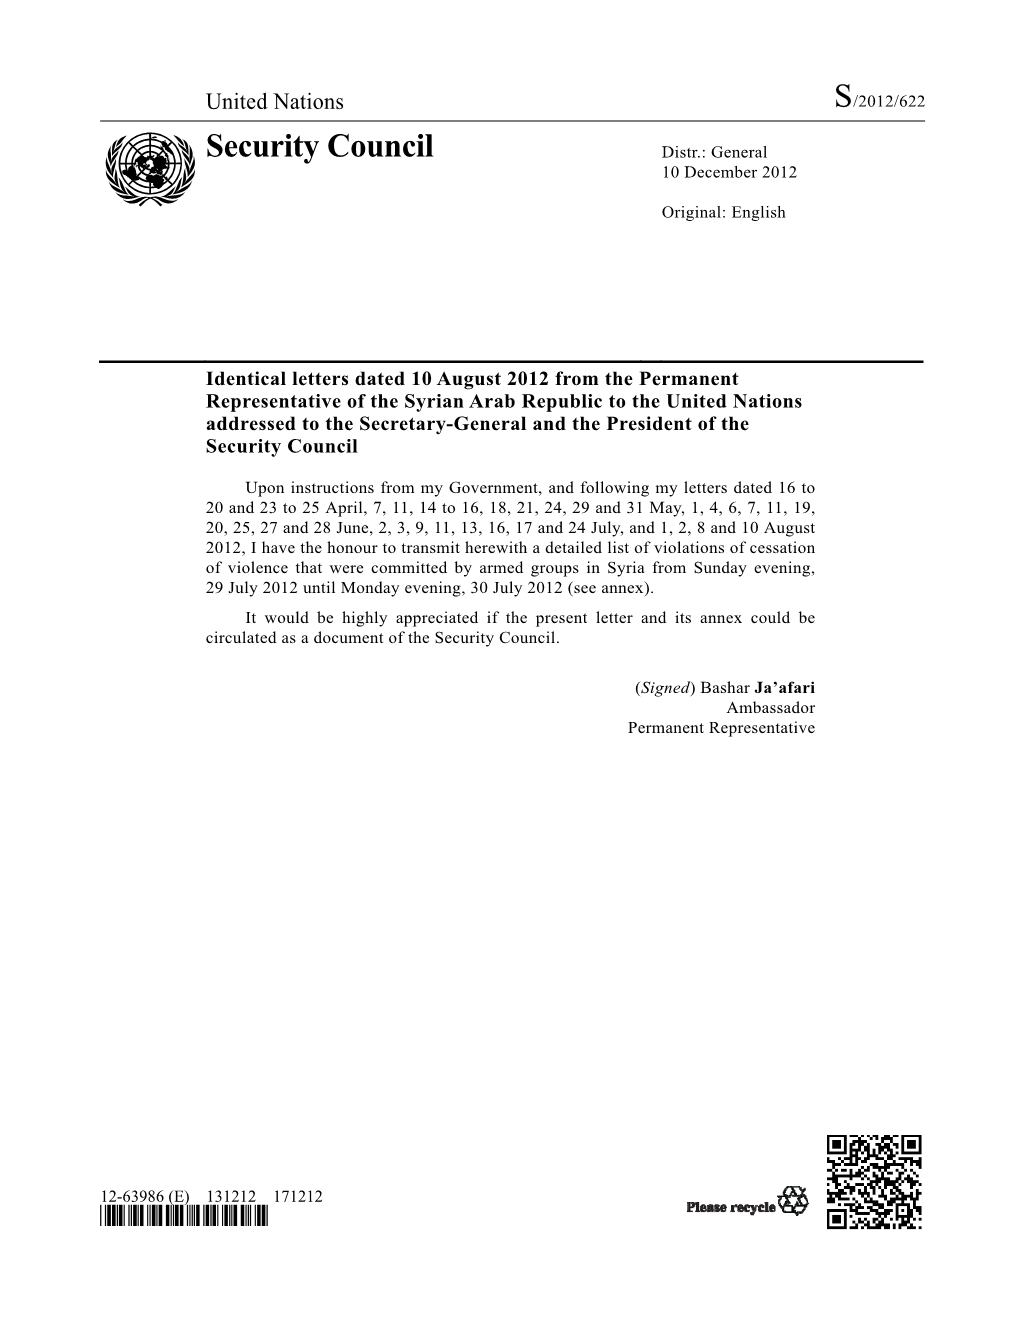 Security Council Distr.: General 10 December 2012